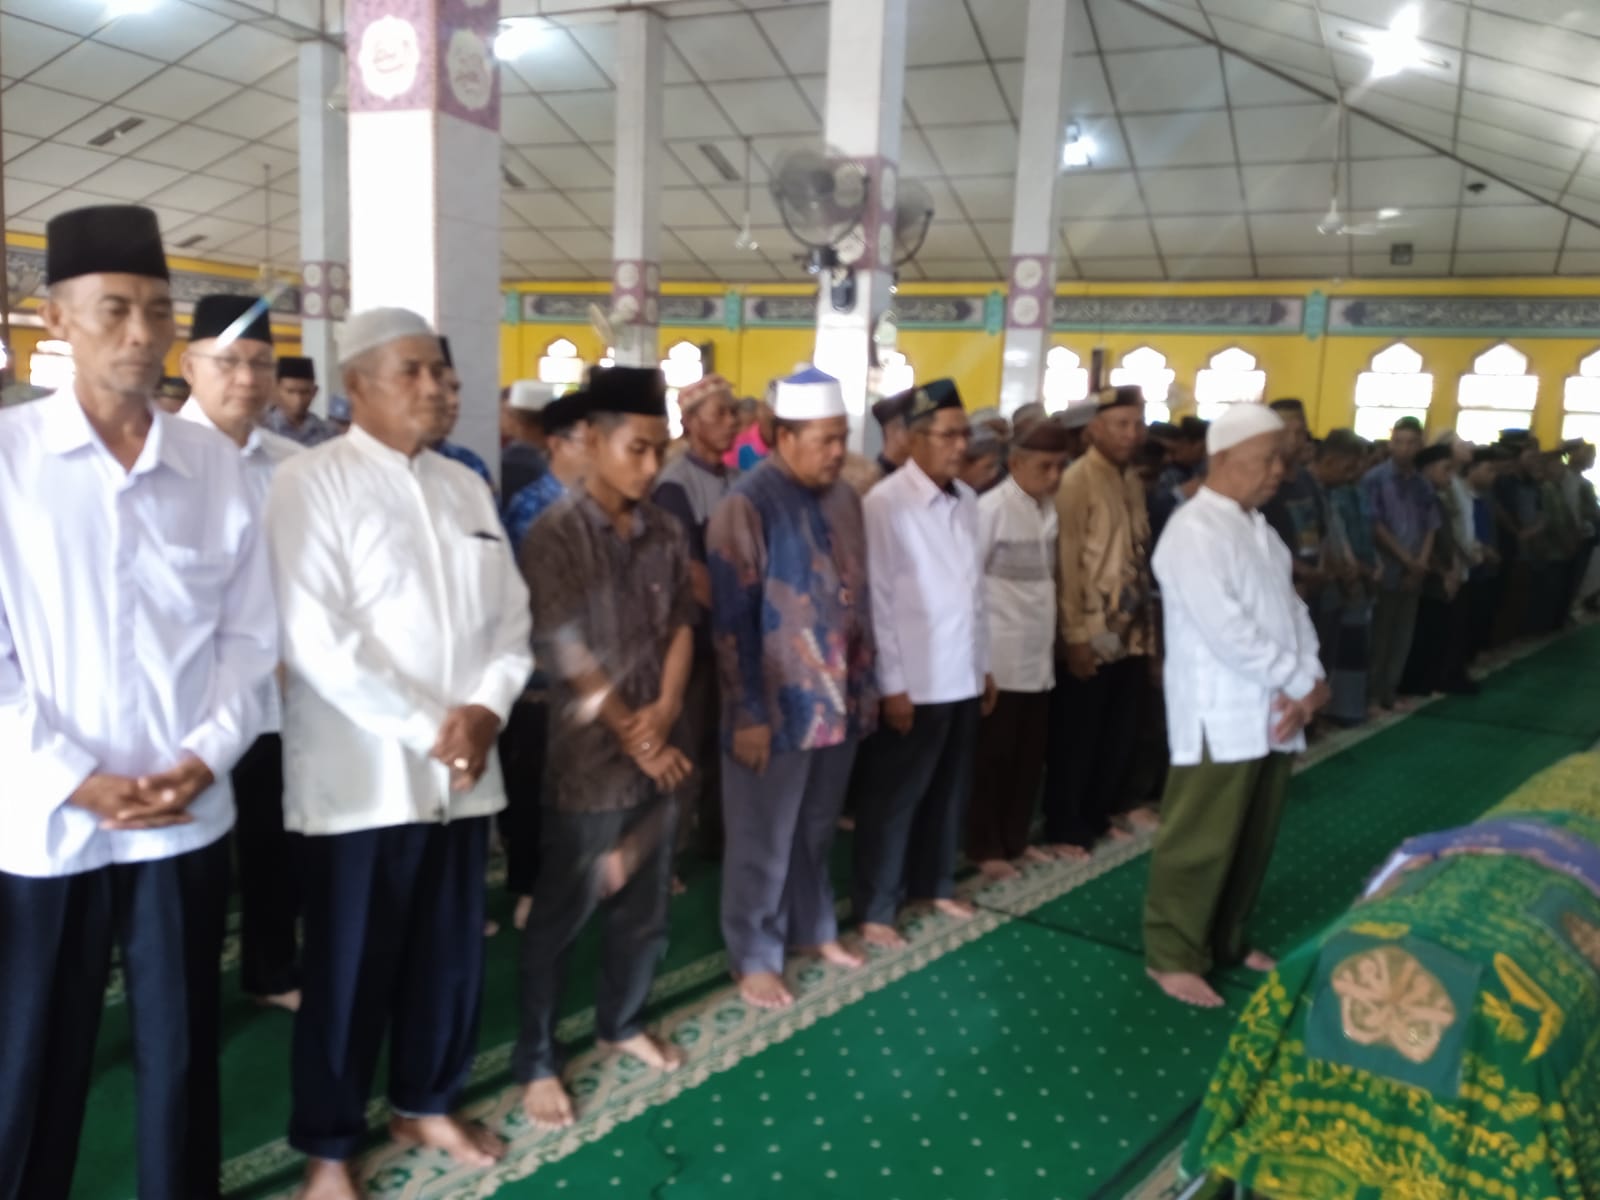 Penghafal Al-Quran 30 Juz Santriwati Ponpes Al-Ittifaqiah Indralaya Ogan Ilir Berpulang